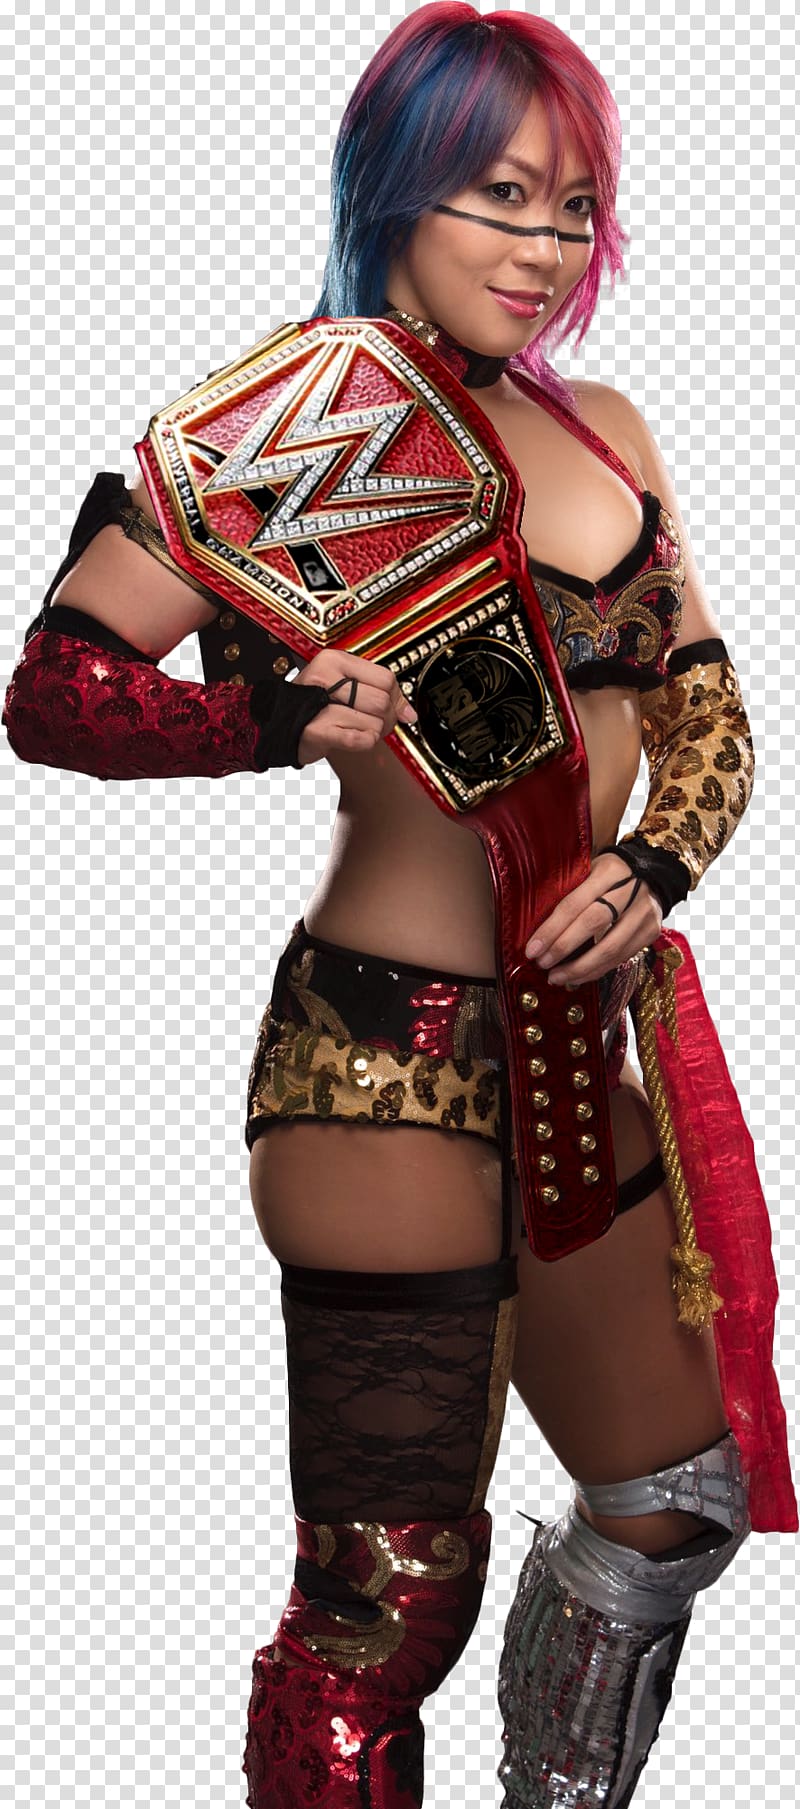 Asuka WWE Universal Championship WWE Raw Women\'s Championship NXT Women\'s Championship WWE Divas Championship, wwe transparent background PNG clipart